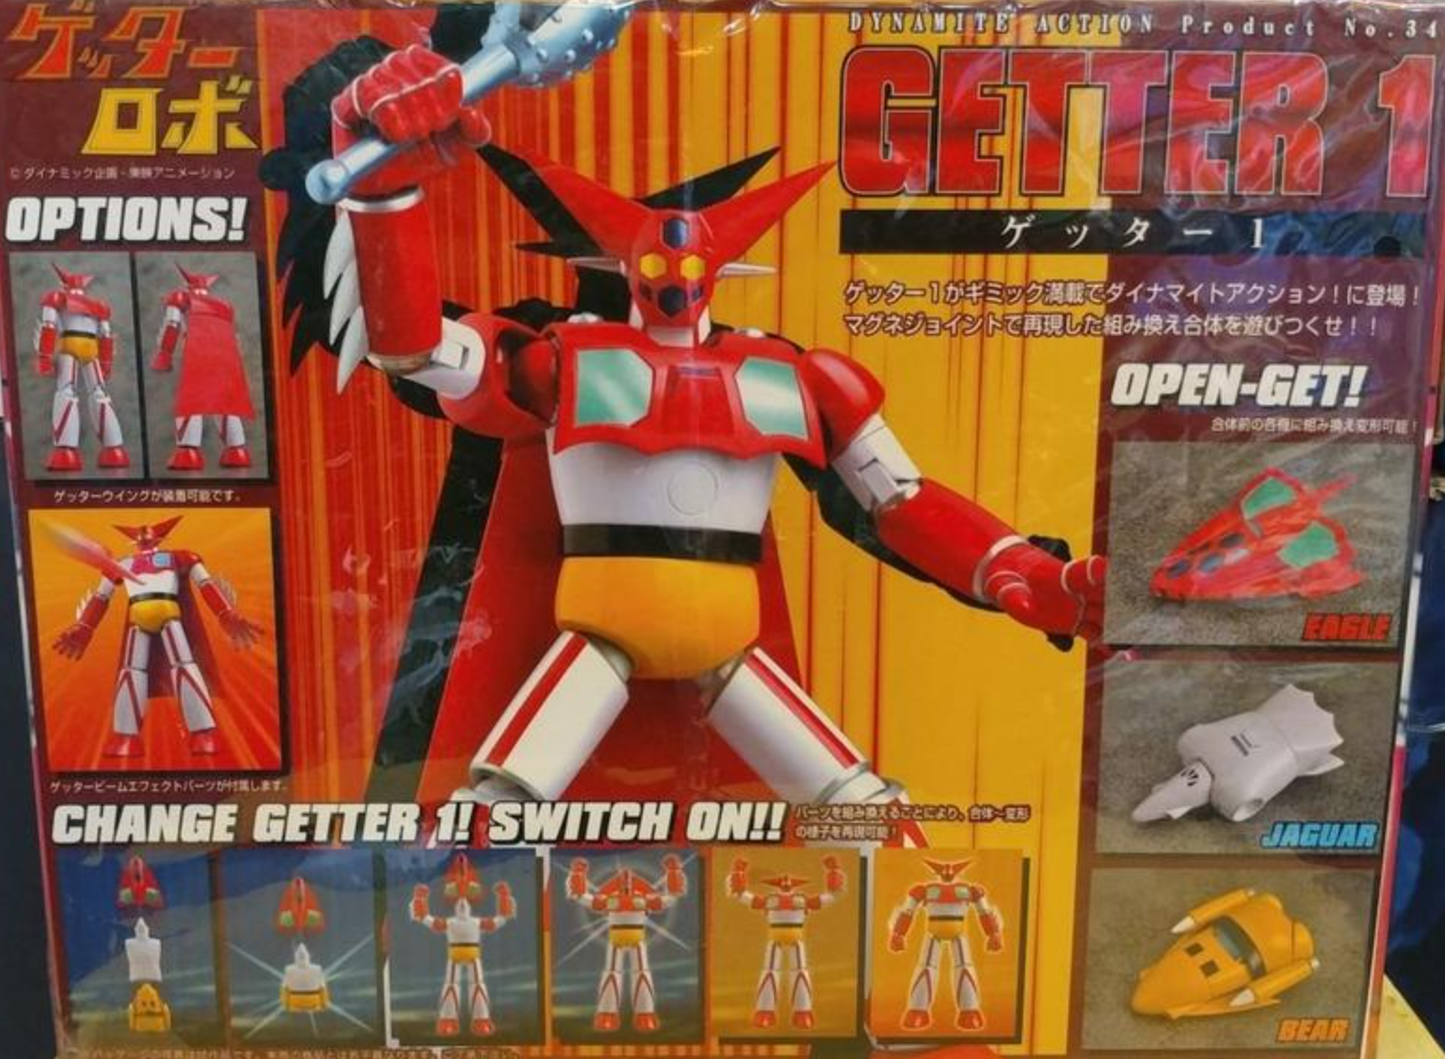 Evolution Toy Dynamite Action No 34SP Getter 1 Metallic Color ver Hong Kong Exclusive Figure